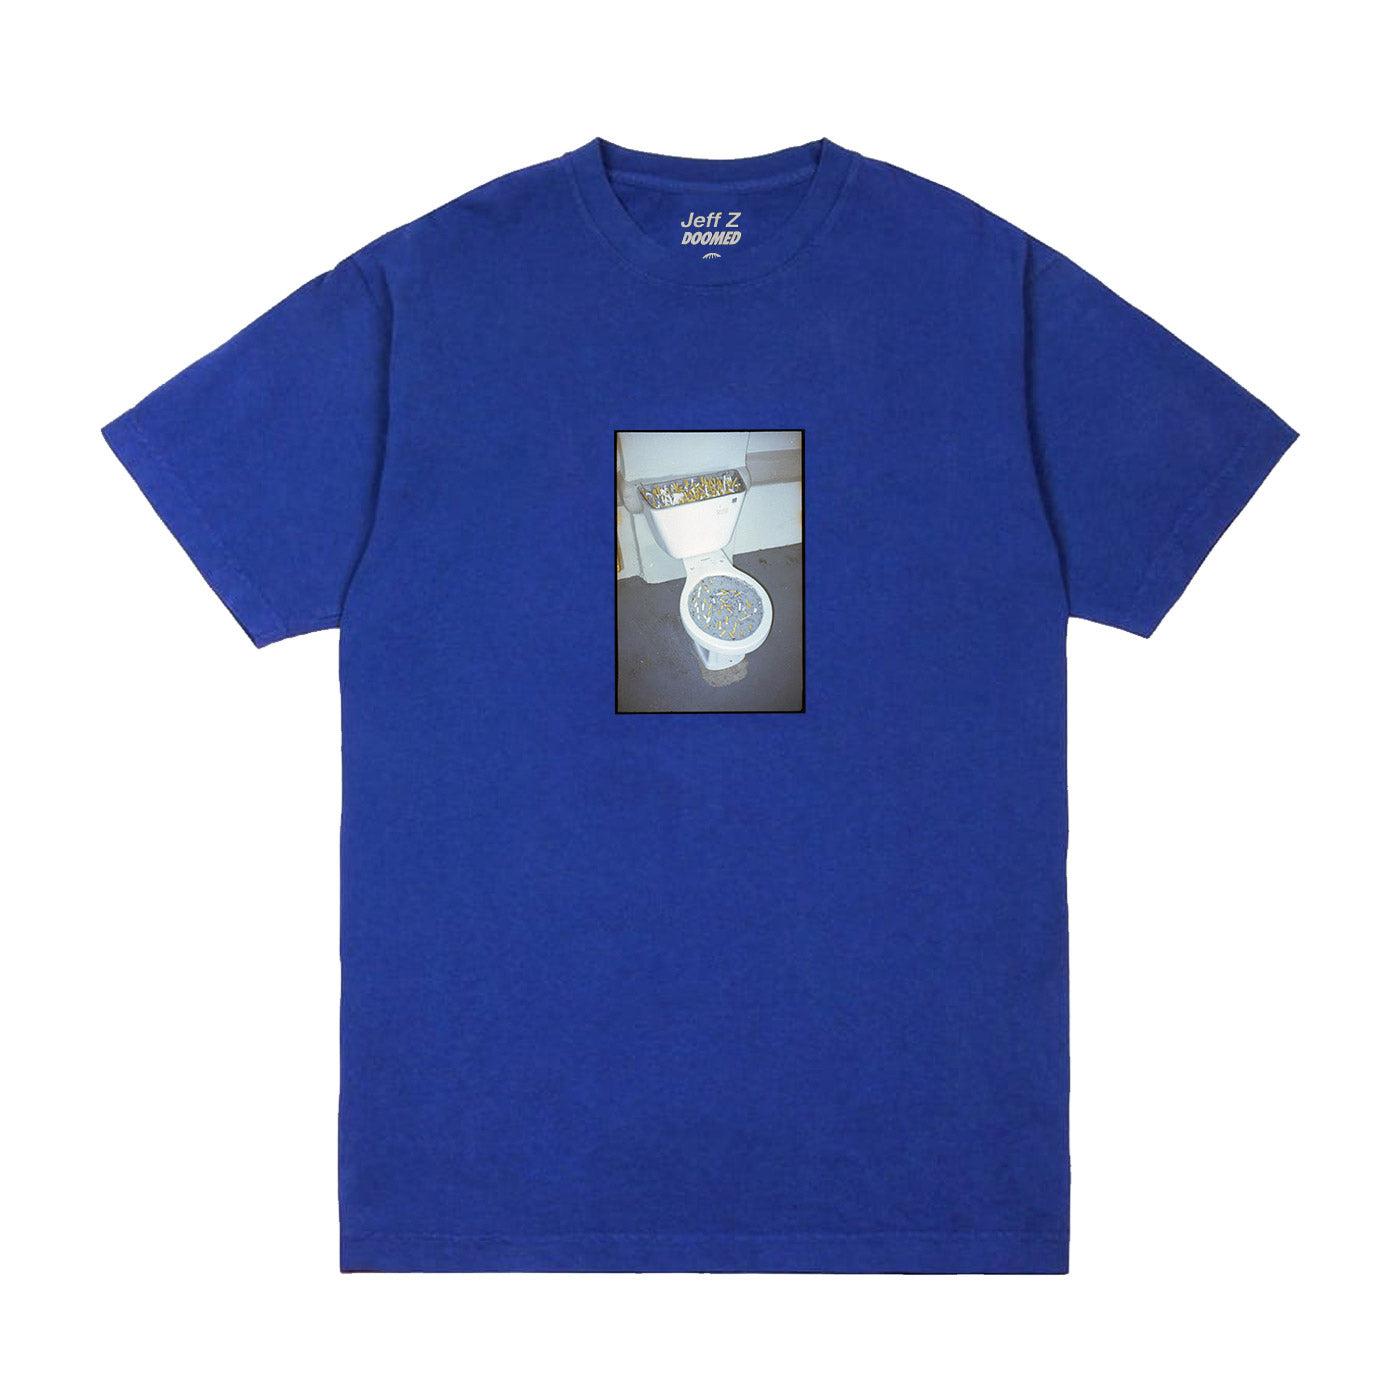 DOOMED × JEFF Z - Ashtray T-Shirt/Royal Blue